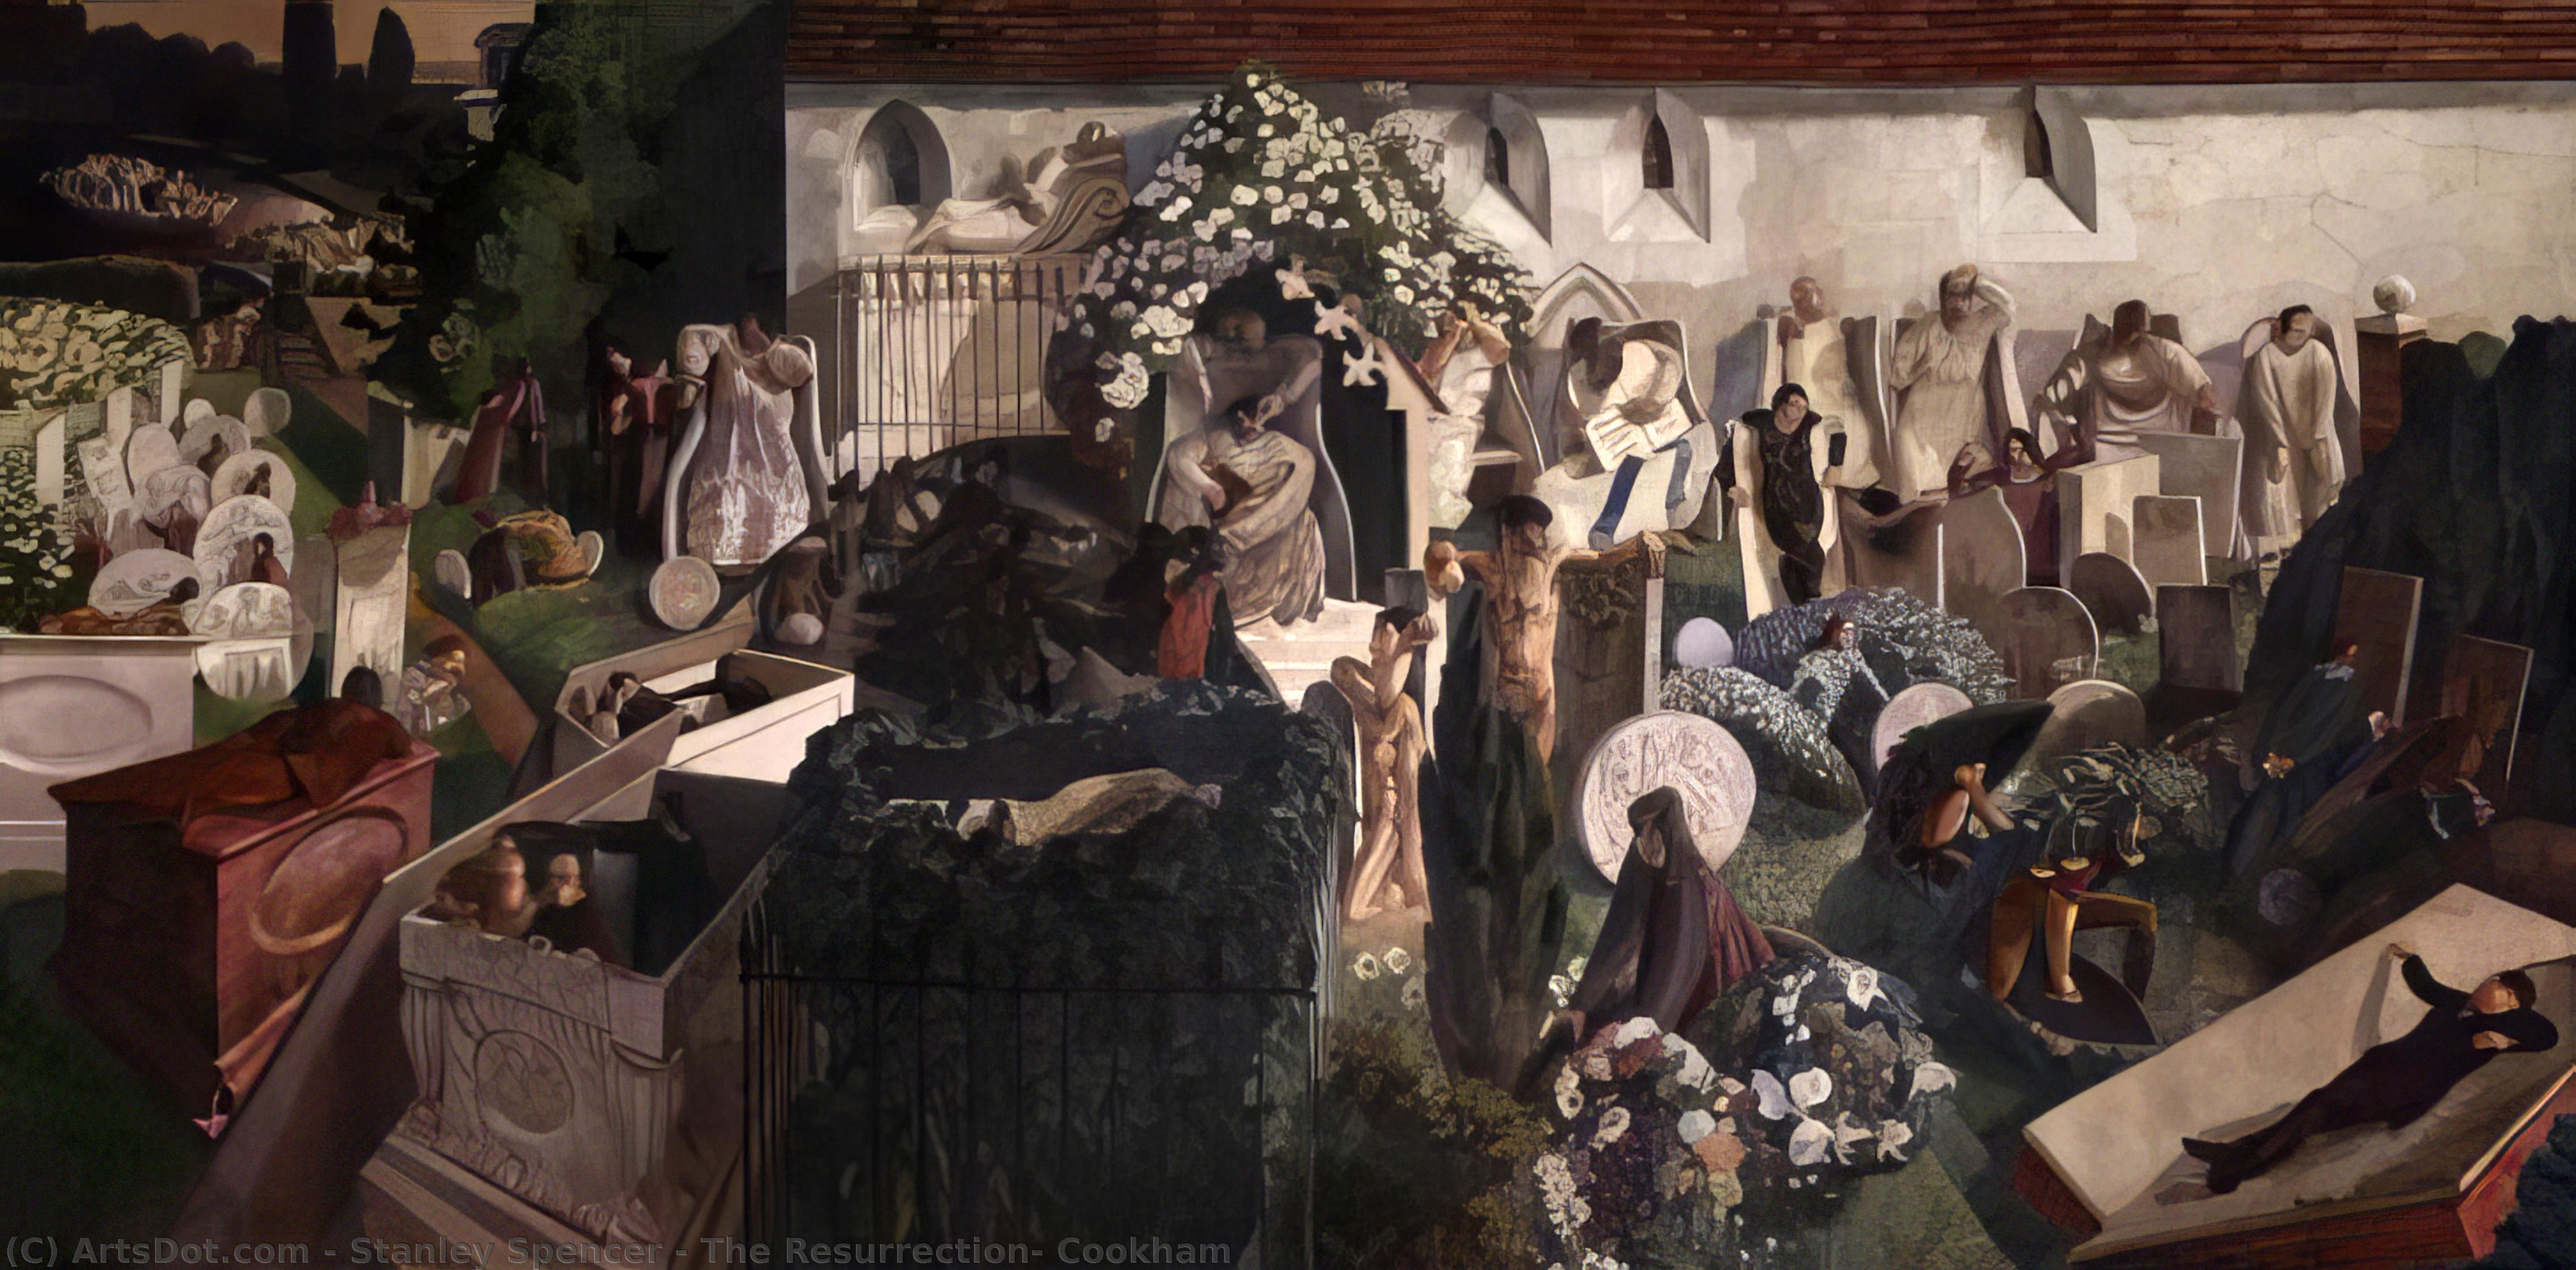 WikiOO.org - Encyclopedia of Fine Arts - Målning, konstverk Stanley Spencer - The Resurrection, Cookham